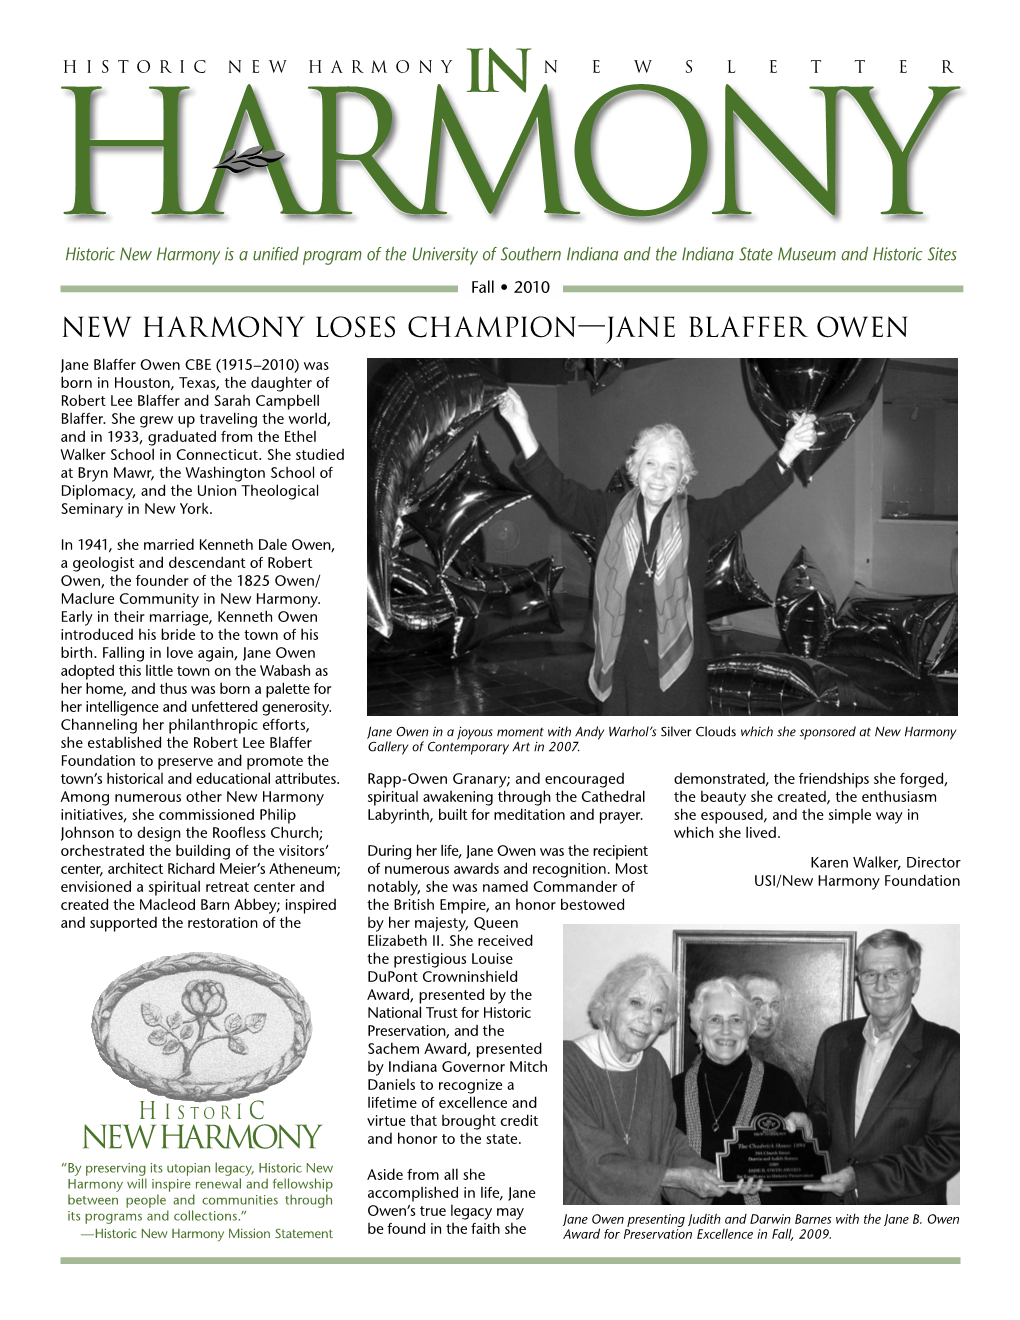 New Harmony Loses Champion—Jane Blaffer Owen